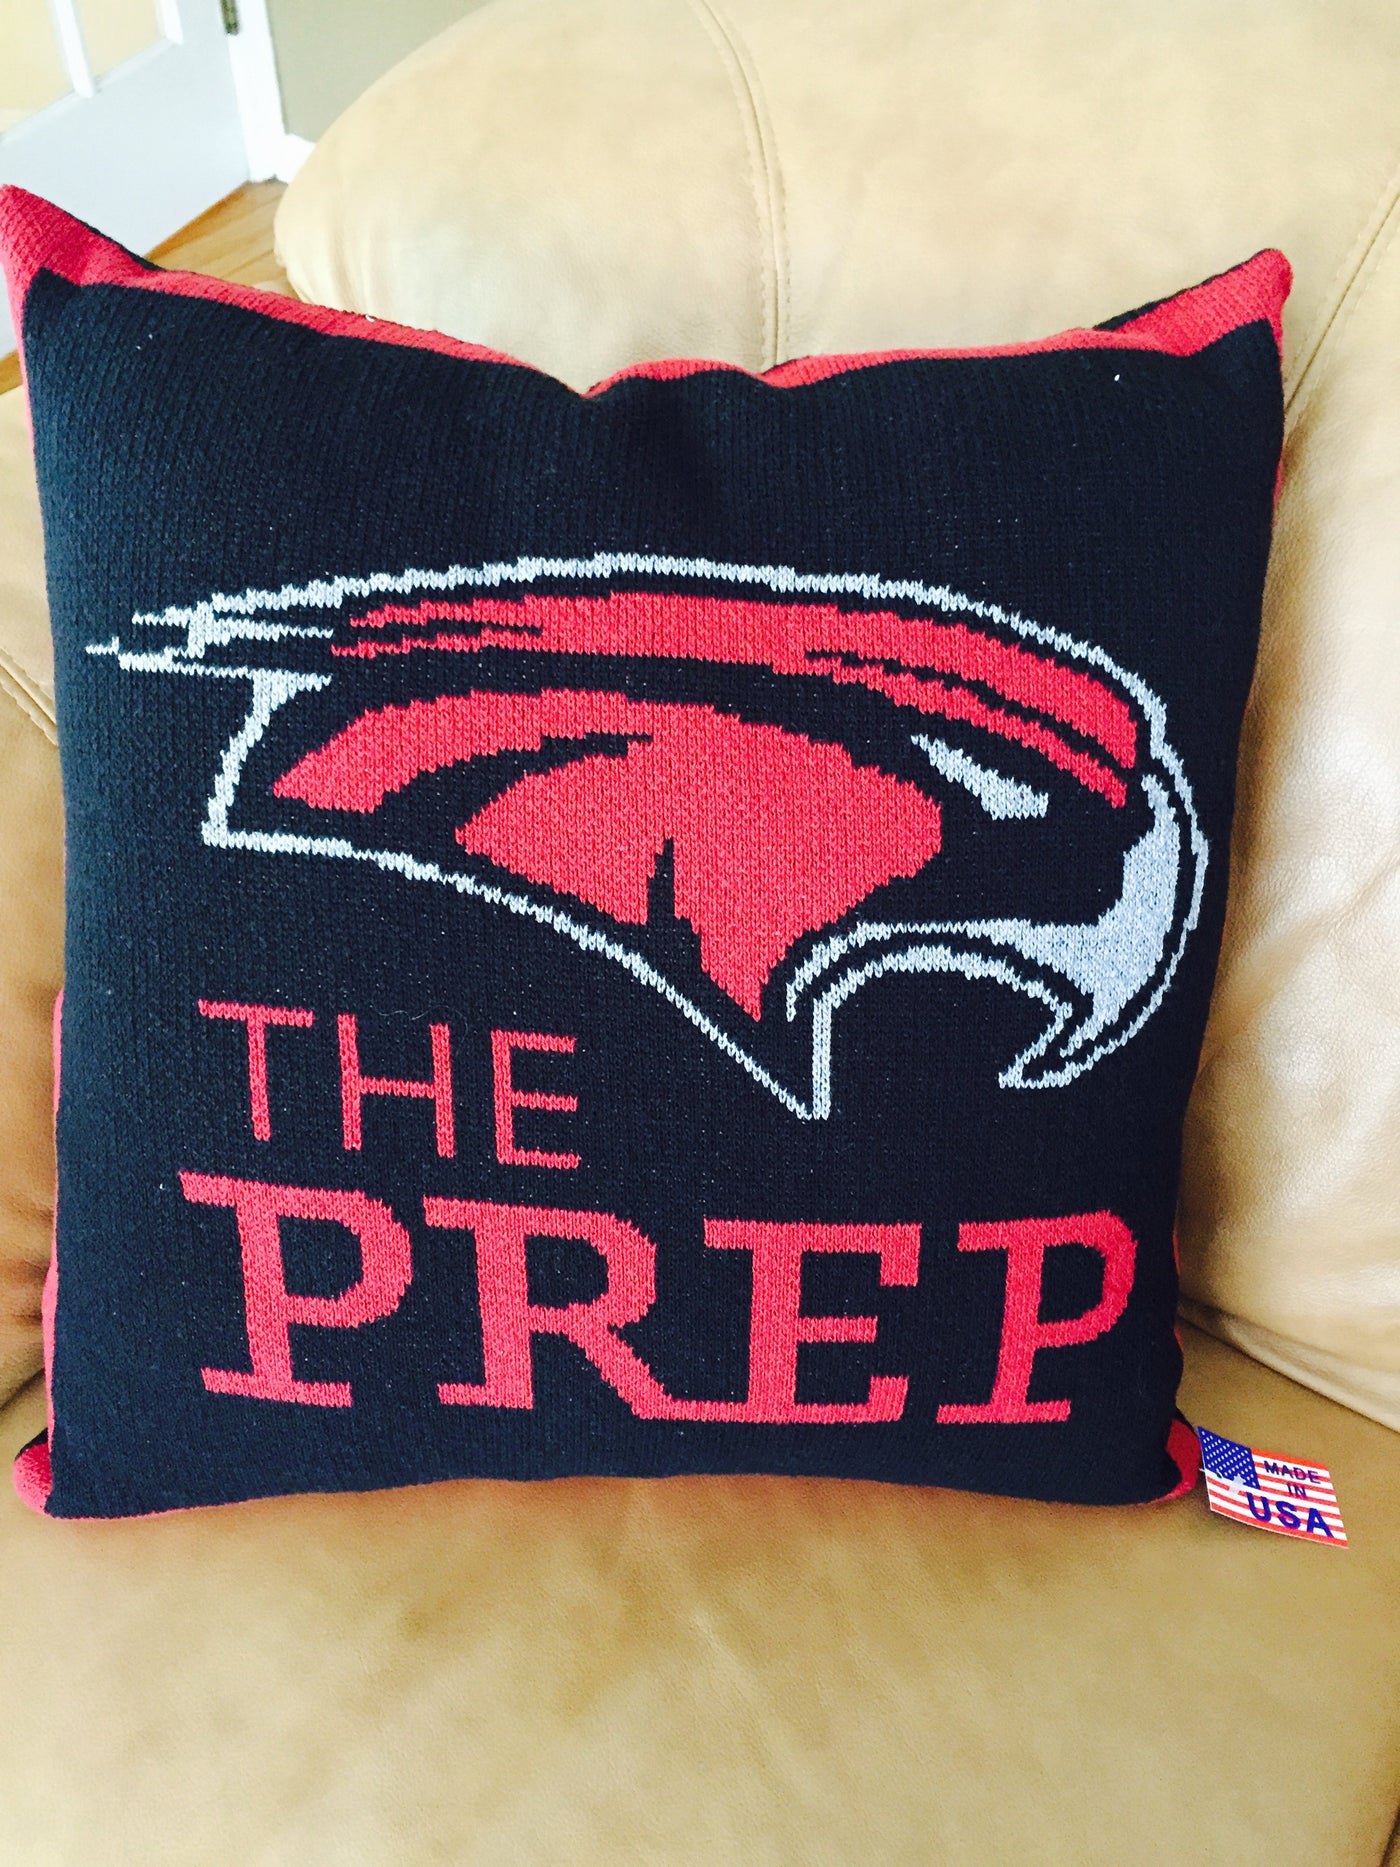 The Prep Hawk Pillow